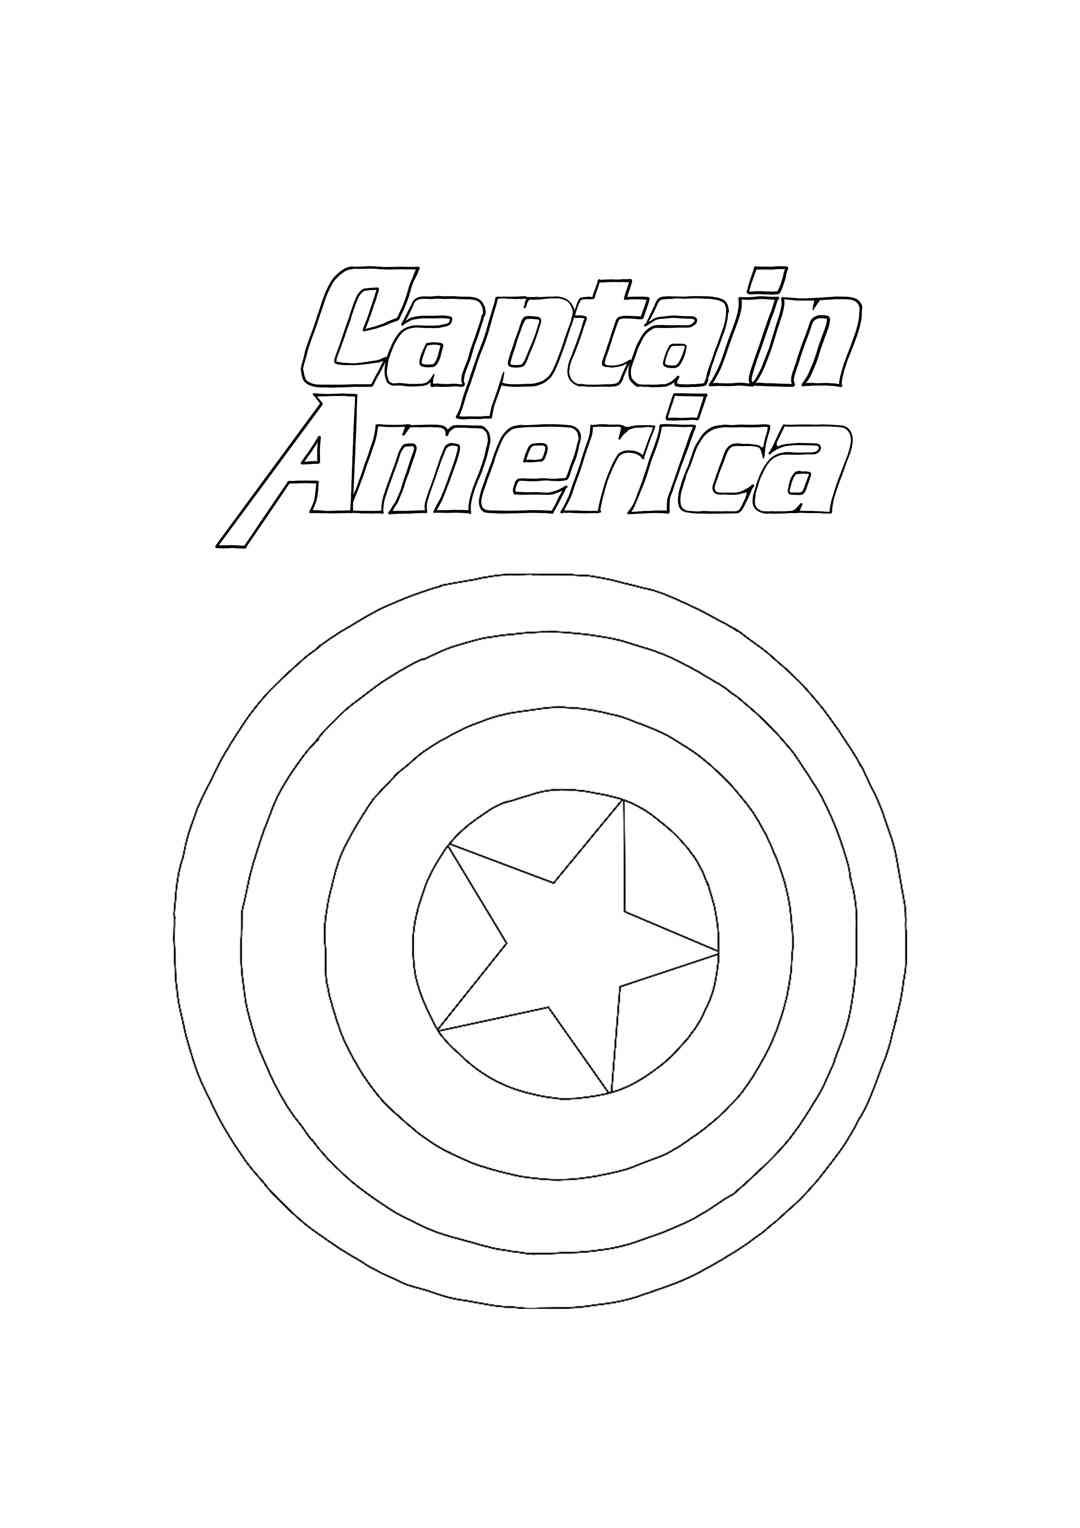 Captain America shield coloring page | Captain america coloring pages,  Coloring pages, Captain america shield